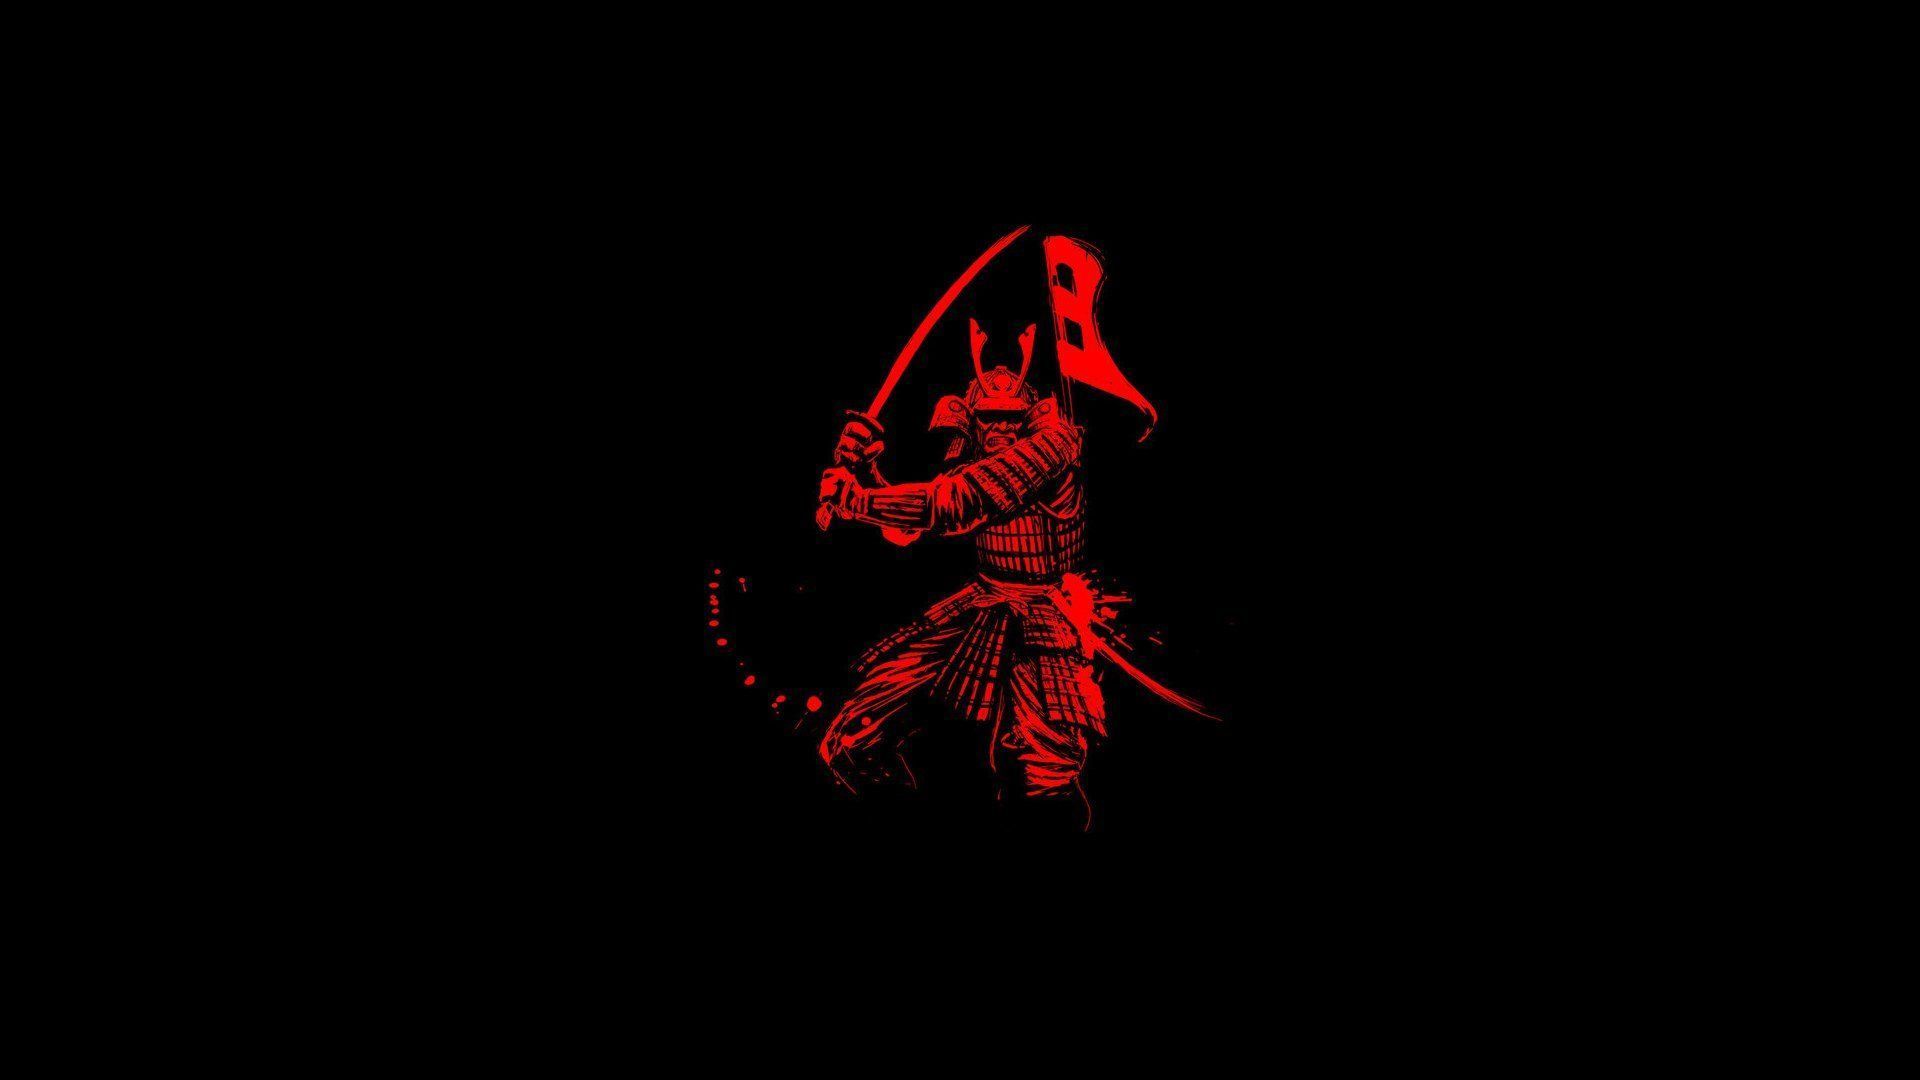 samurai warrior katana background HD wallpaper. Samurai wallpaper, Warriors wallpaper, Samurai jack wallpaper